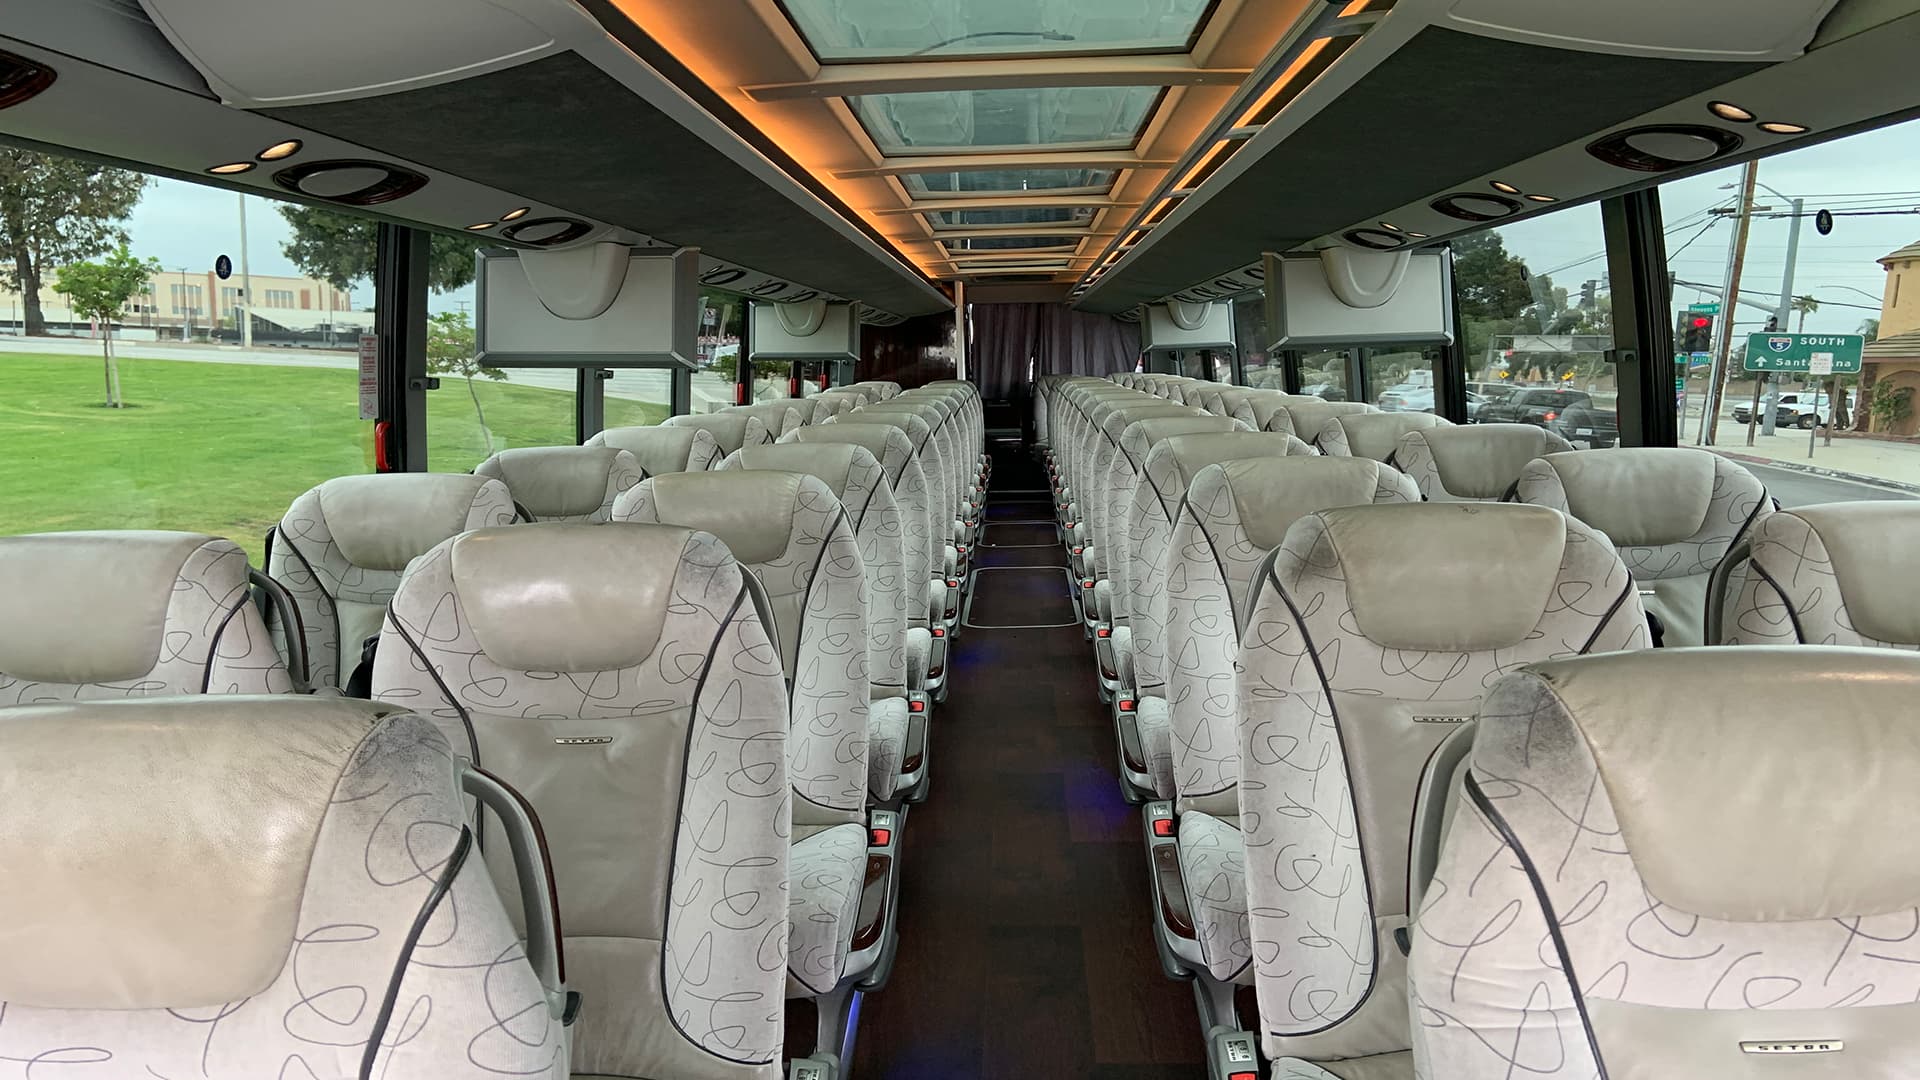 View of Seats inside TourCoach Bus